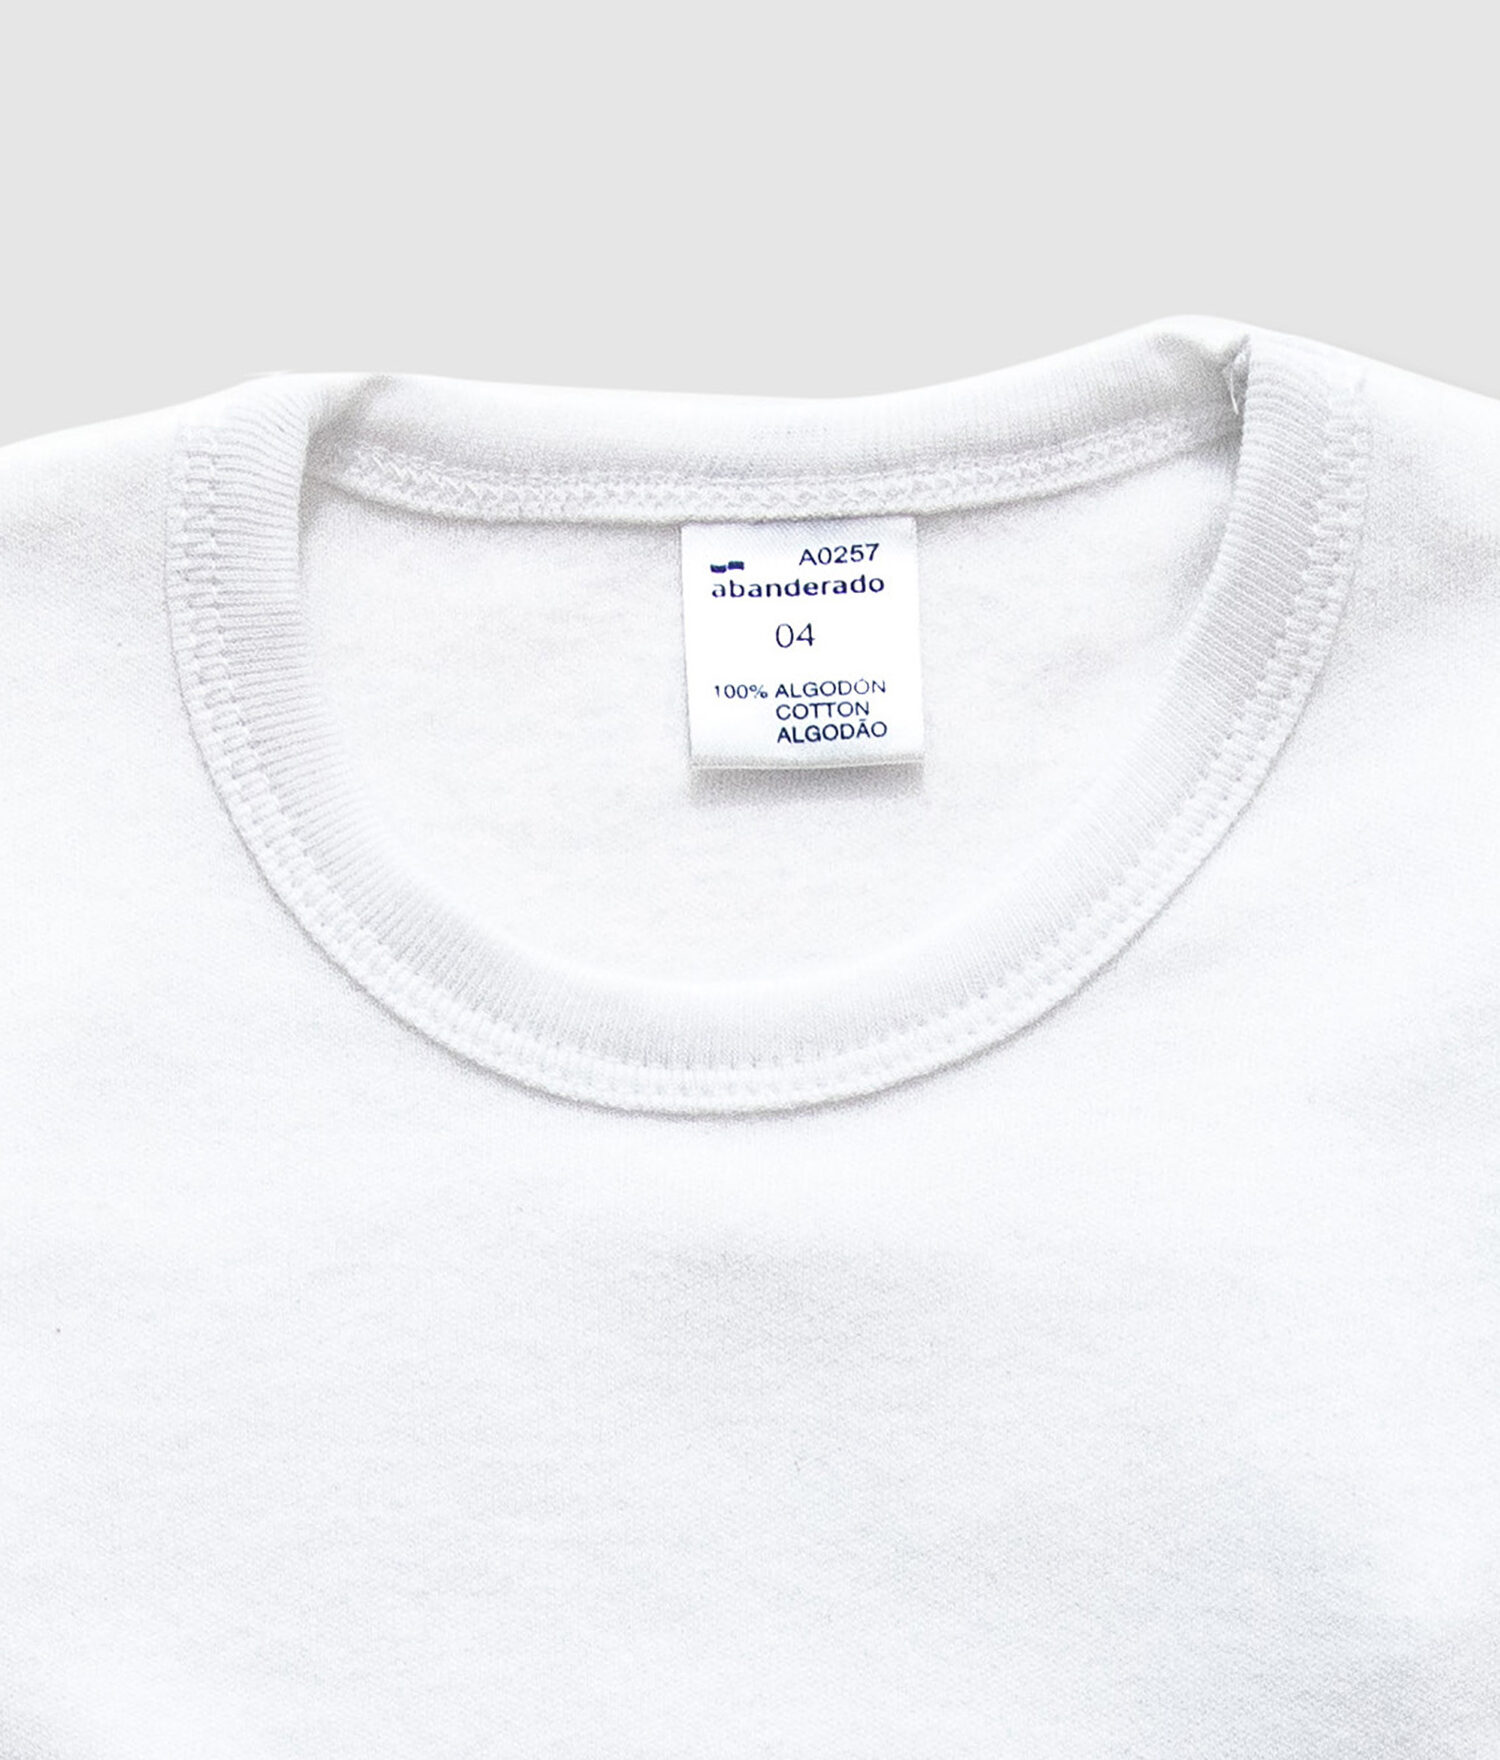 Camiseta interior niño termica MLarga Blanco